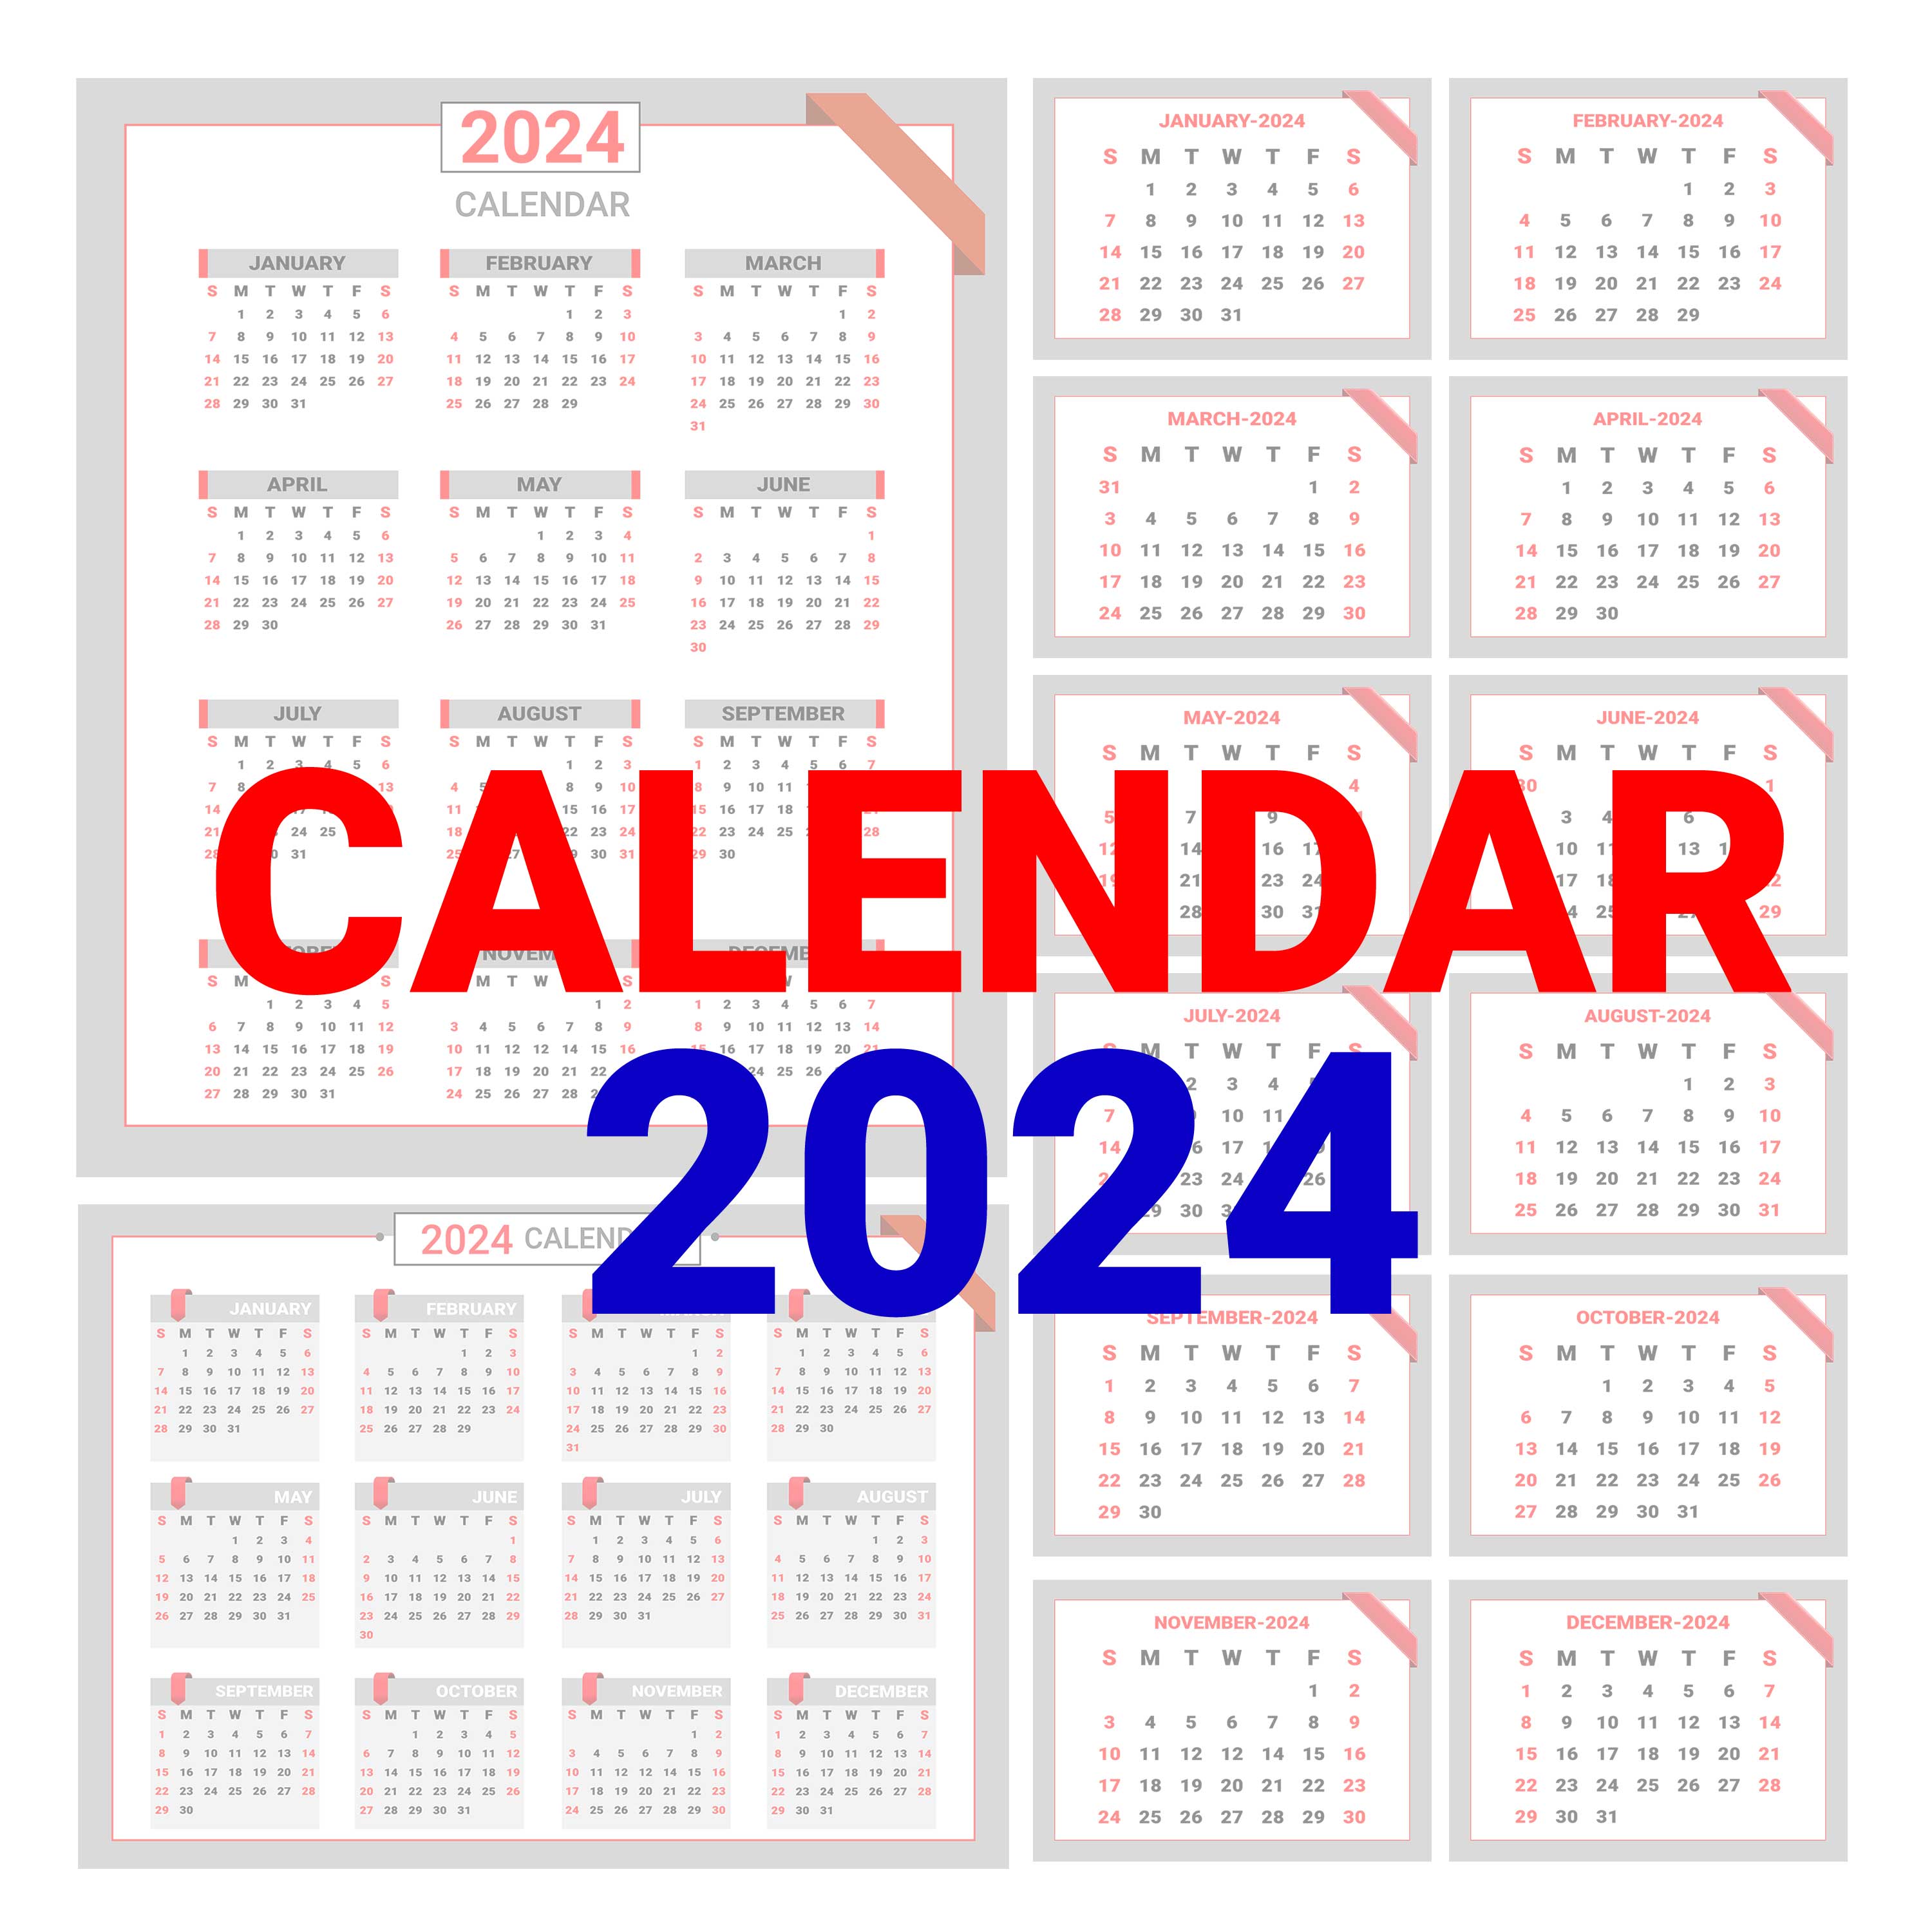 Calendar-2024 preview image.